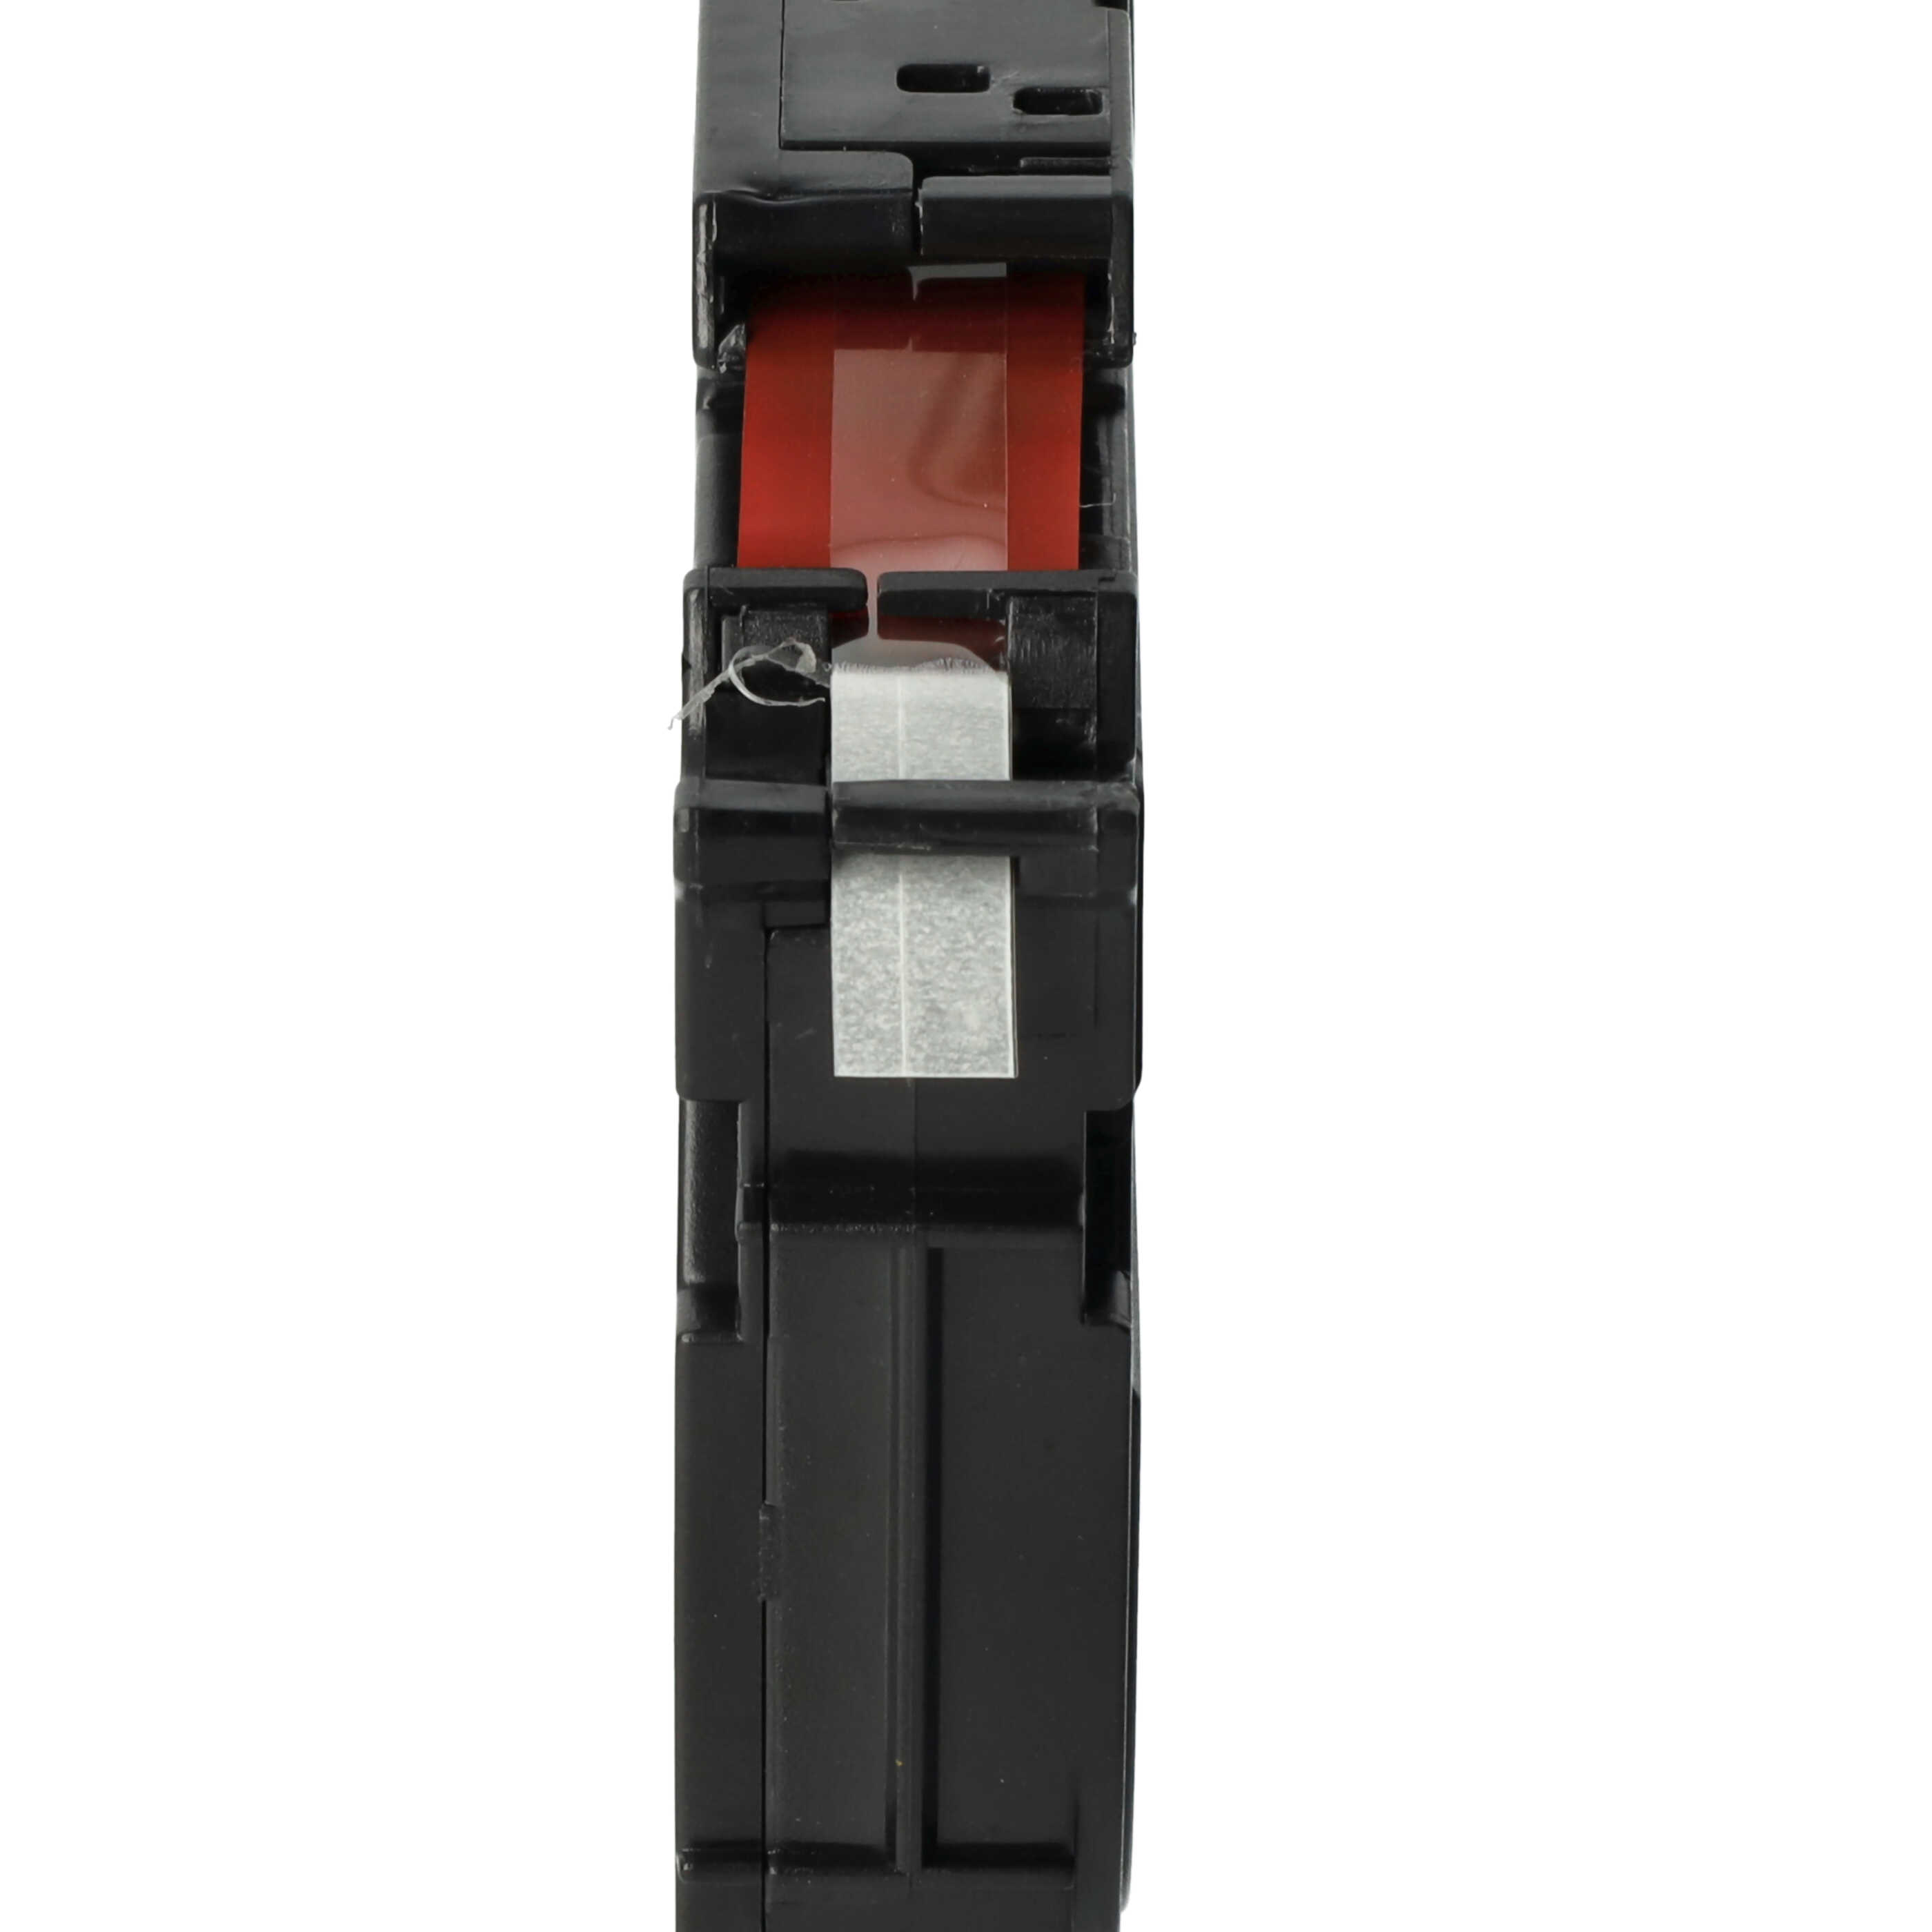 Casete cinta escritura reemplaza Brother TZE-112 Rojo su Transparente